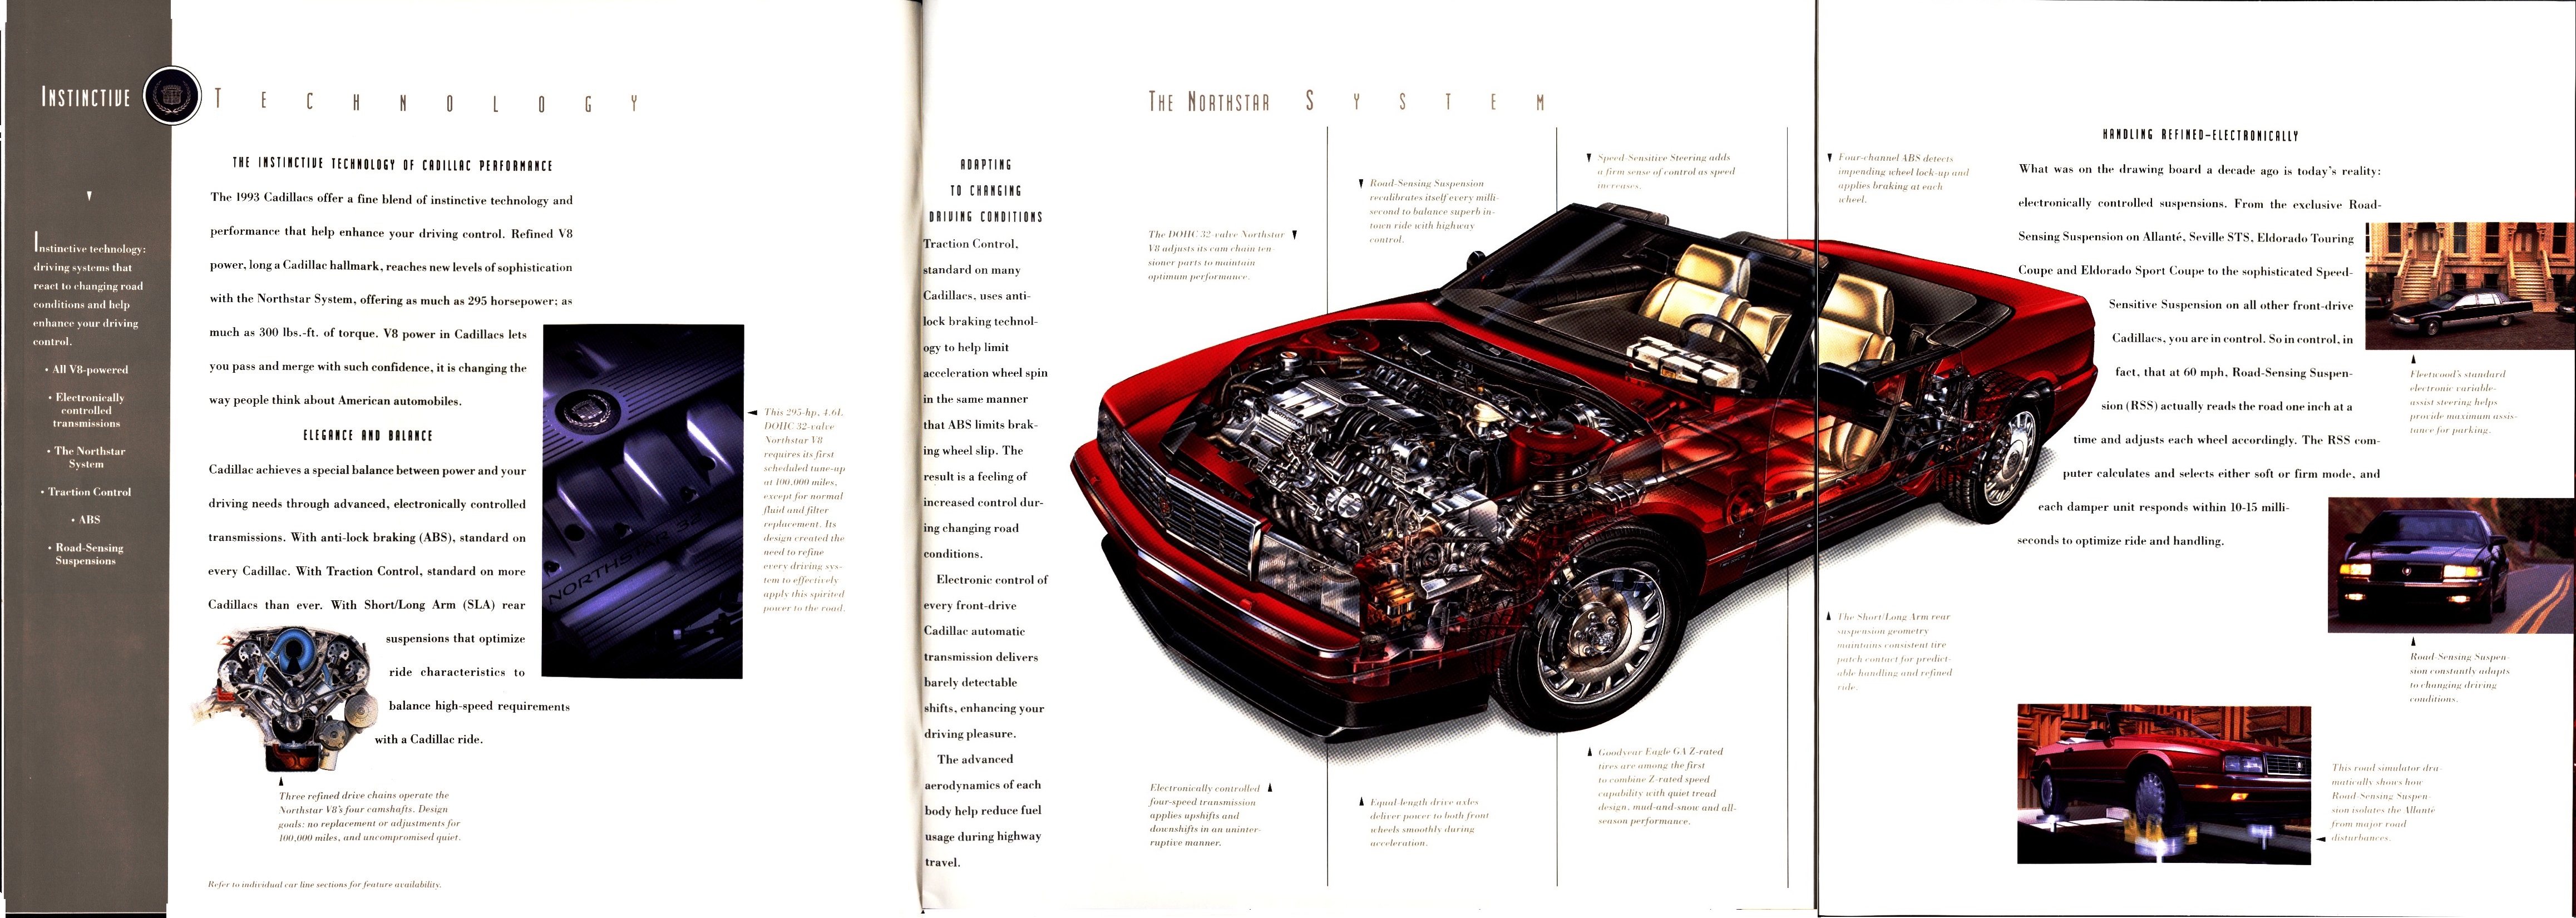 1993 Cadillac Full Line Prestige Brochure 02a-02b-02c